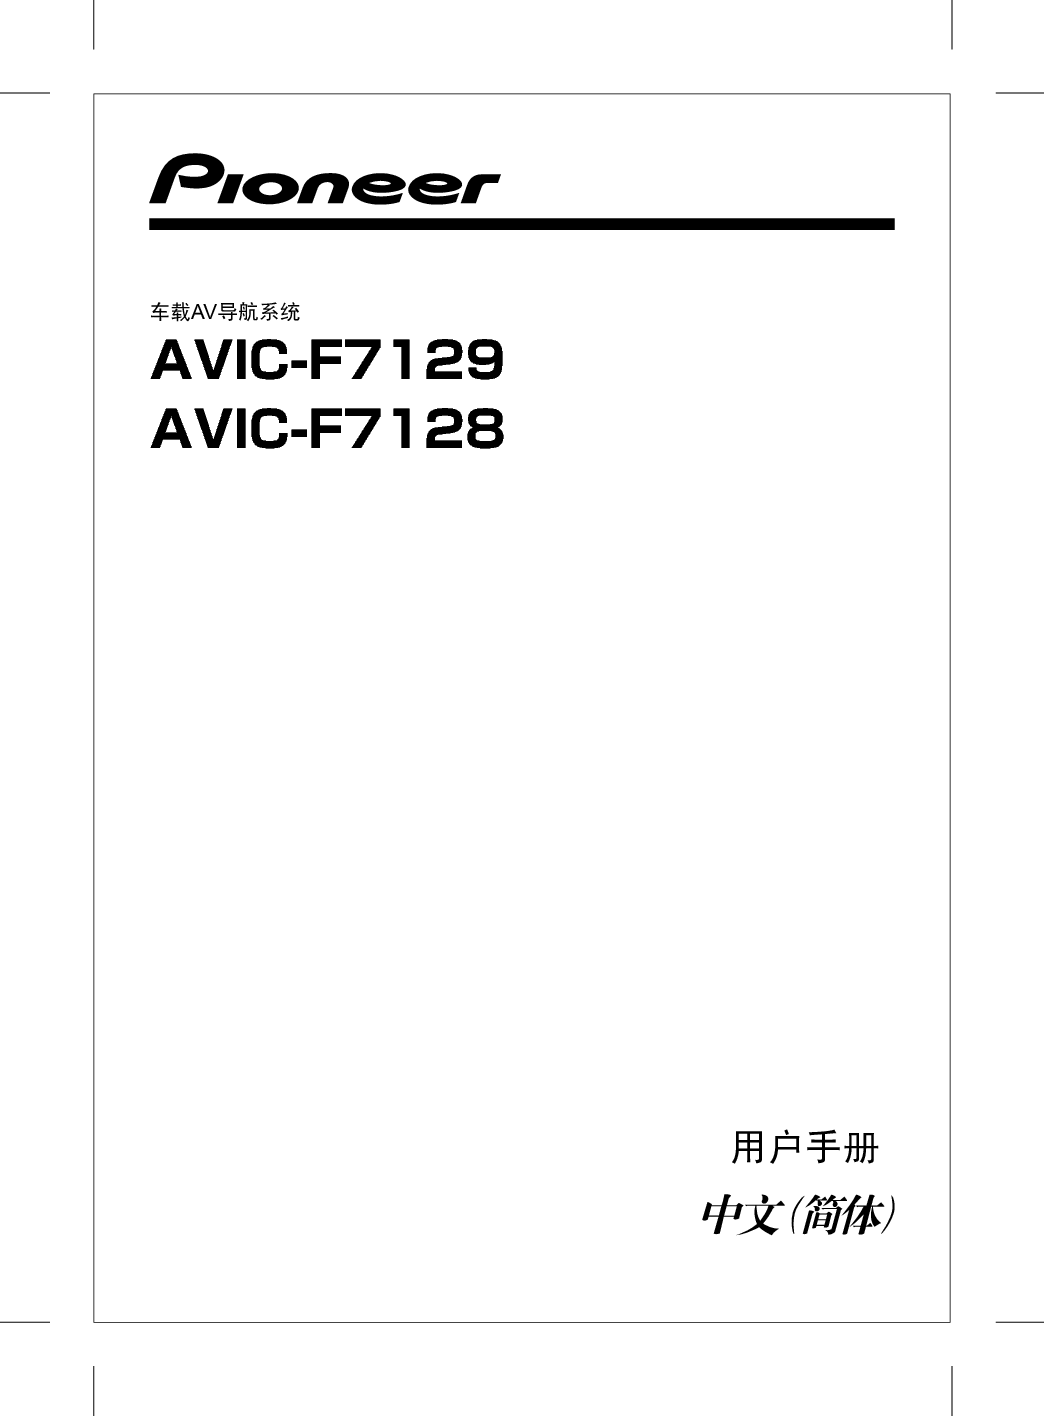 先锋 Pioneer AVIC-F7128 使用说明书 封面